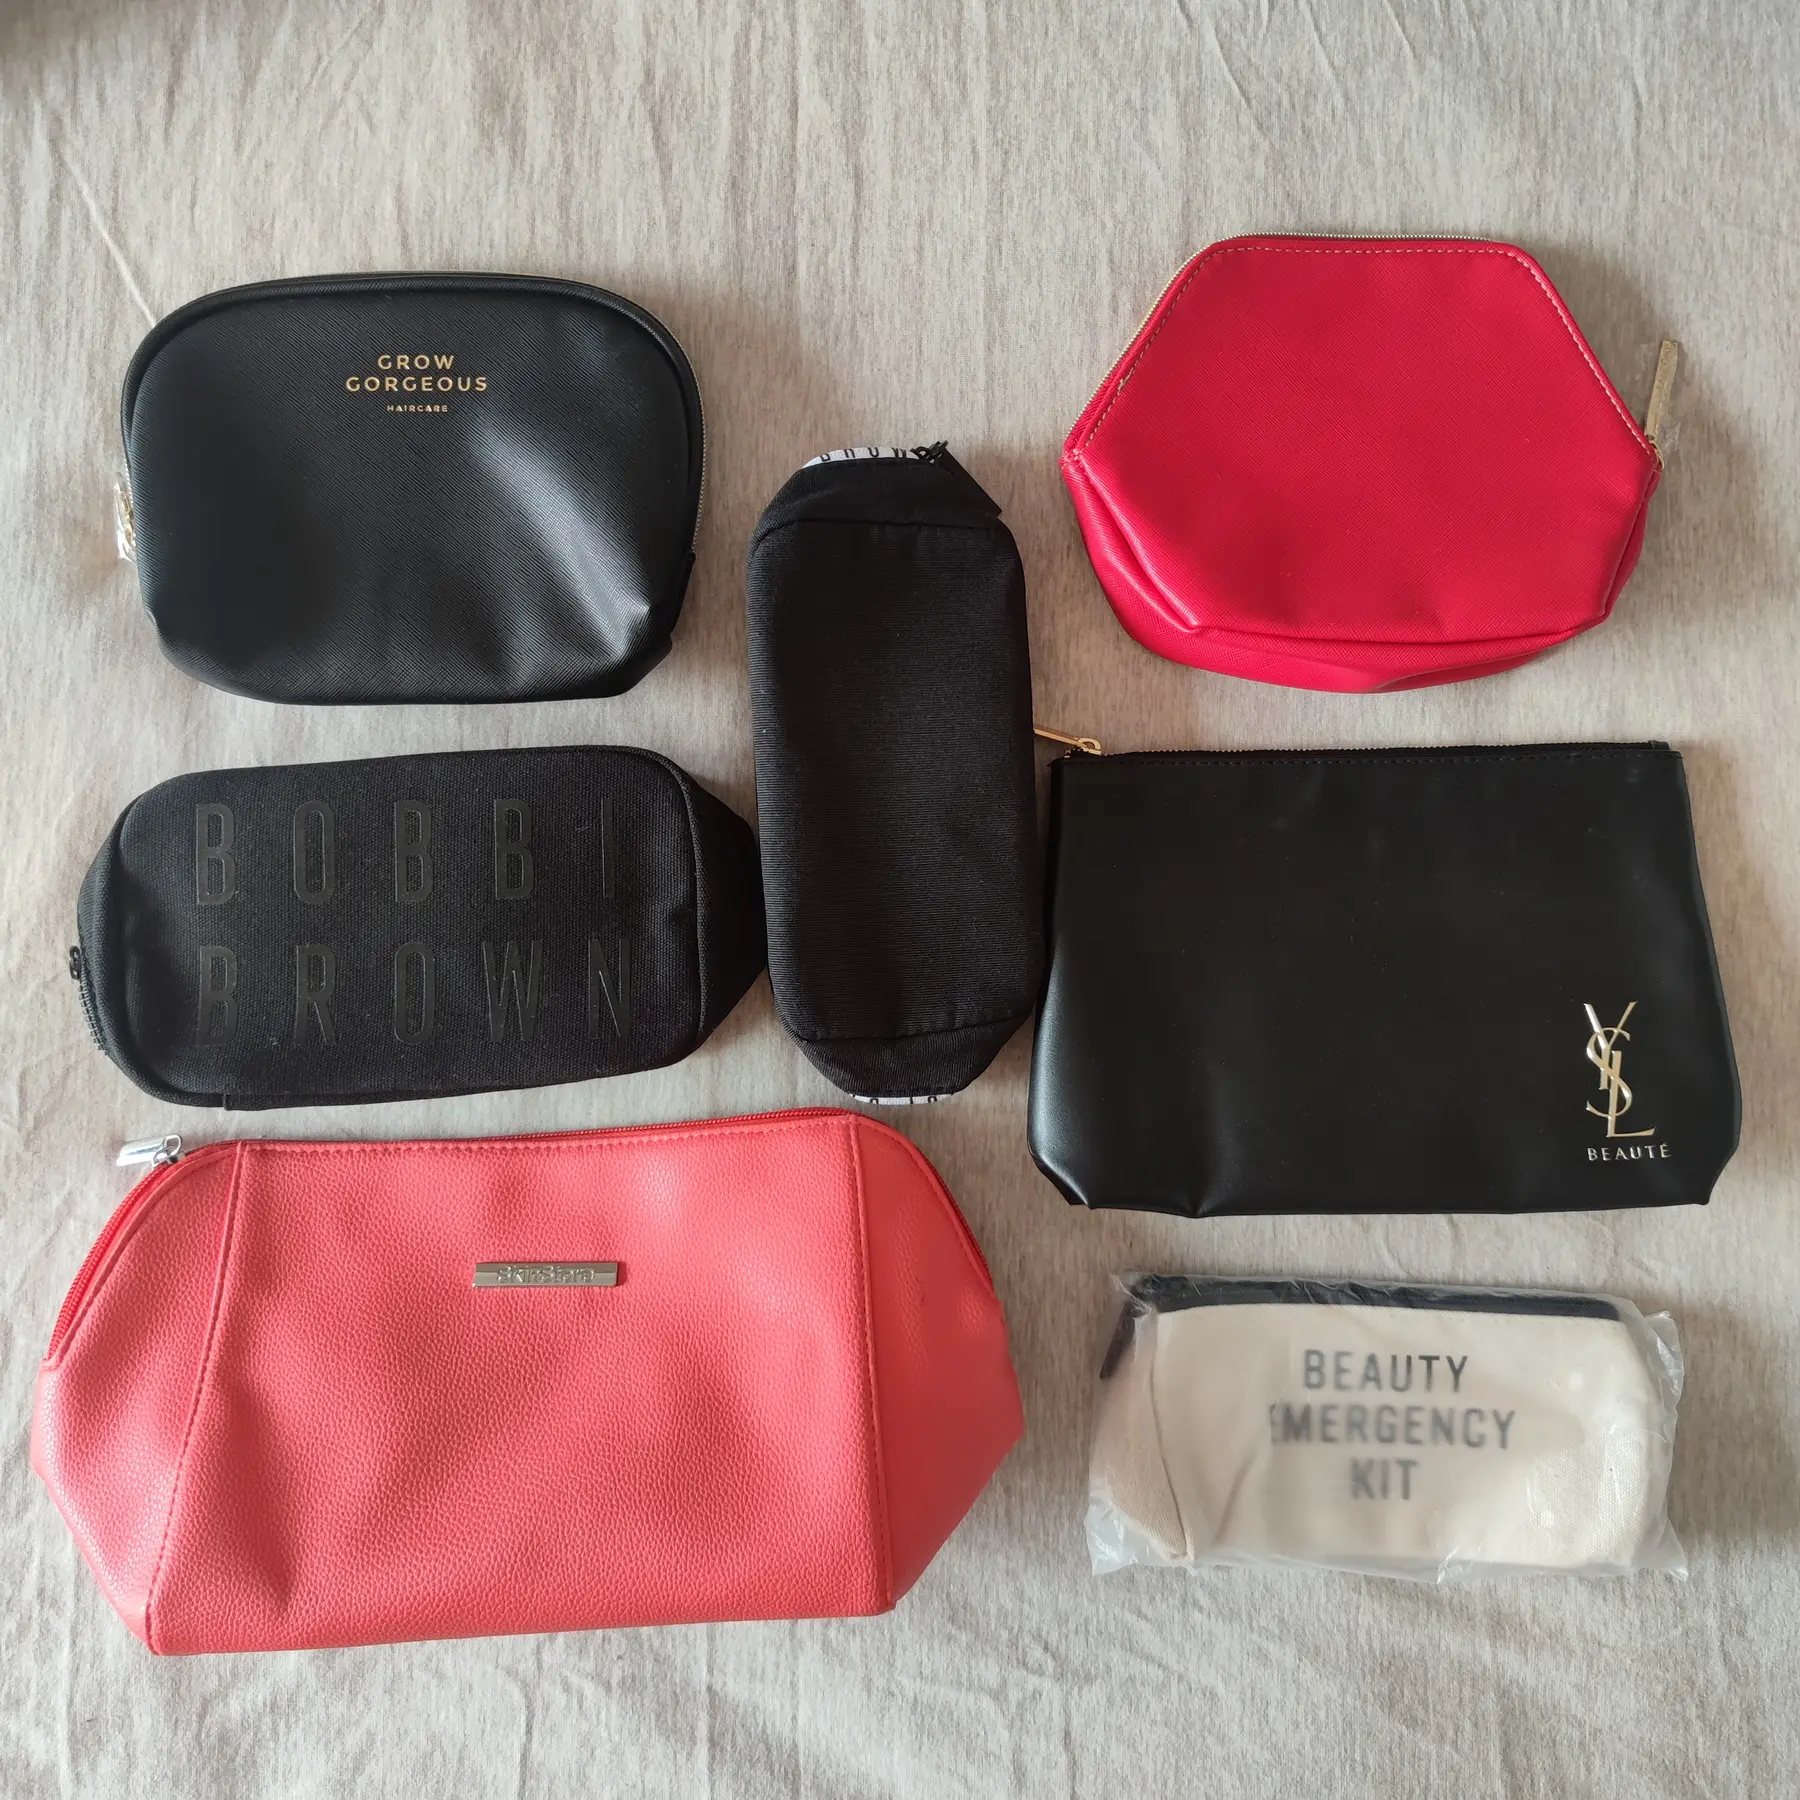 Prezzo competitivo oem custom cosmetic bag cosmetic organizer bag makeup train case nero